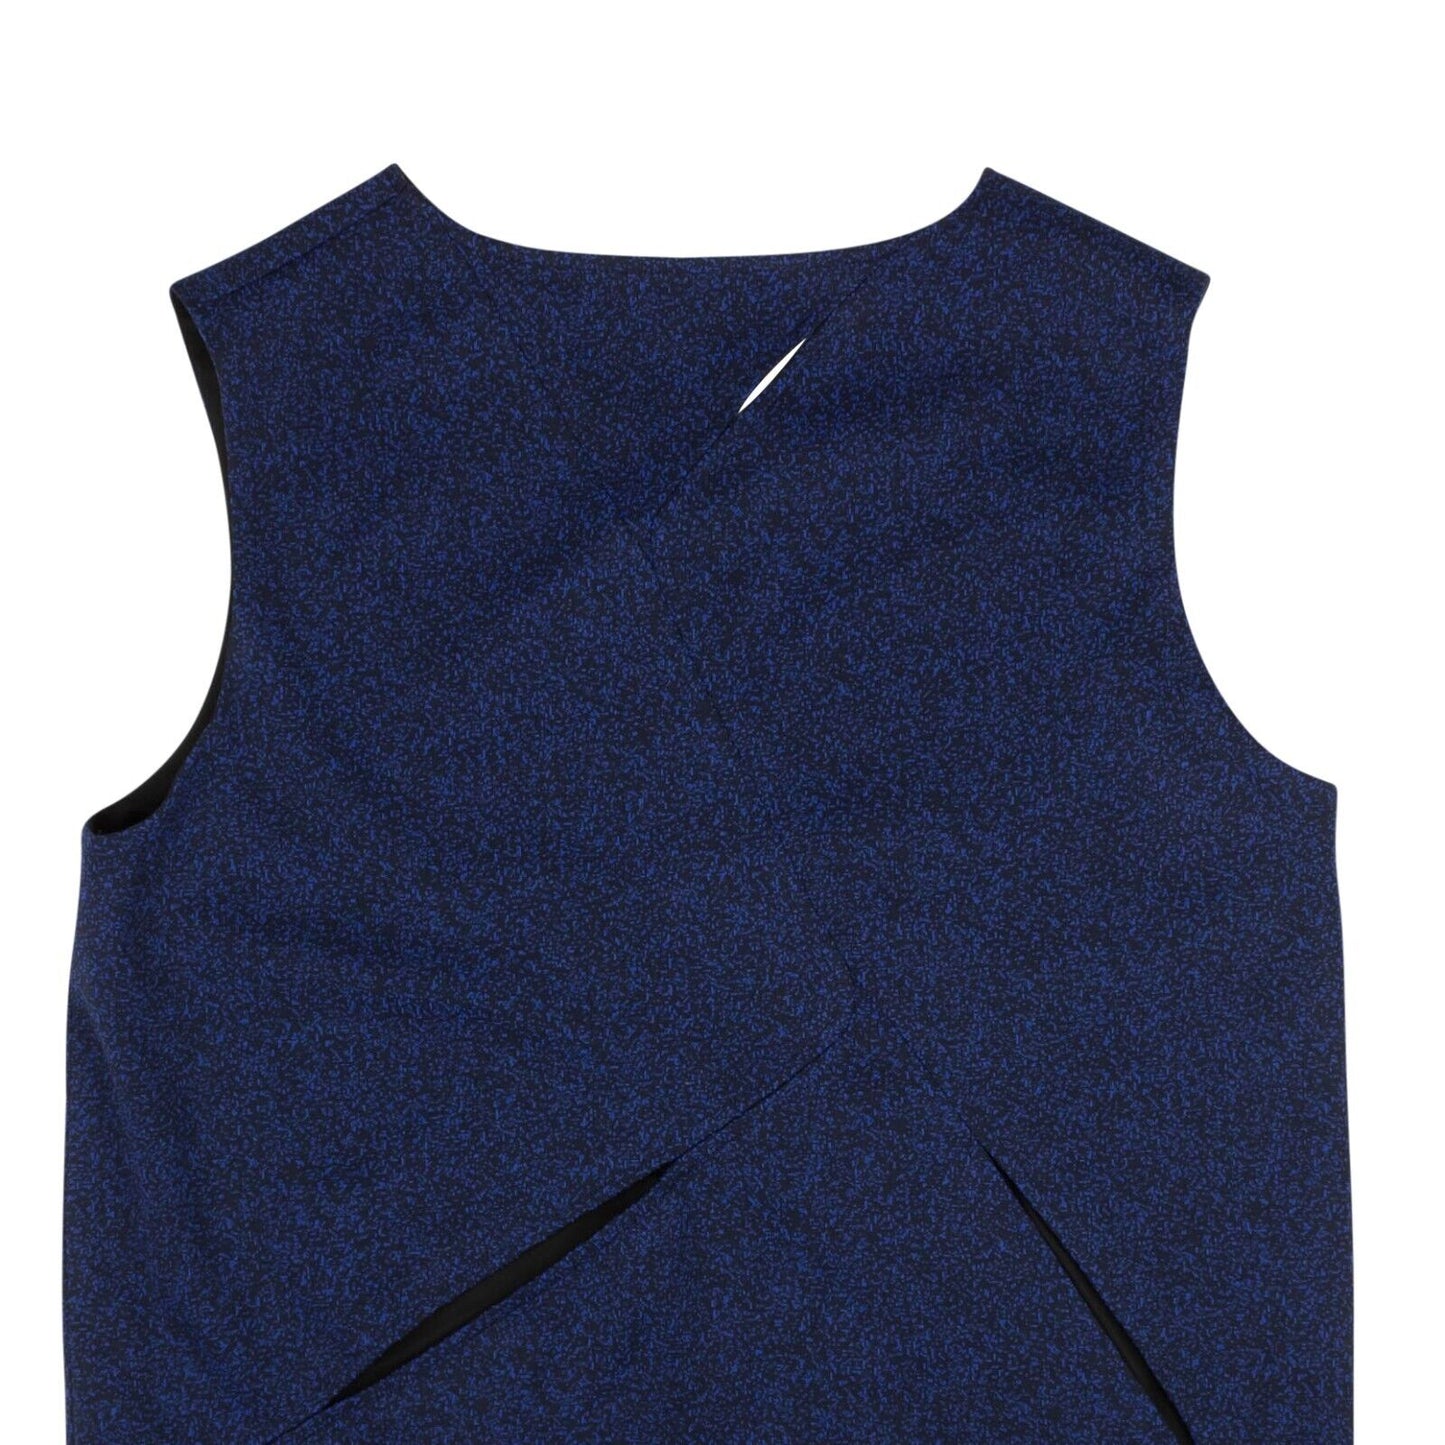 Namcheko Tasebar Sweater Vest -  Black/Blue